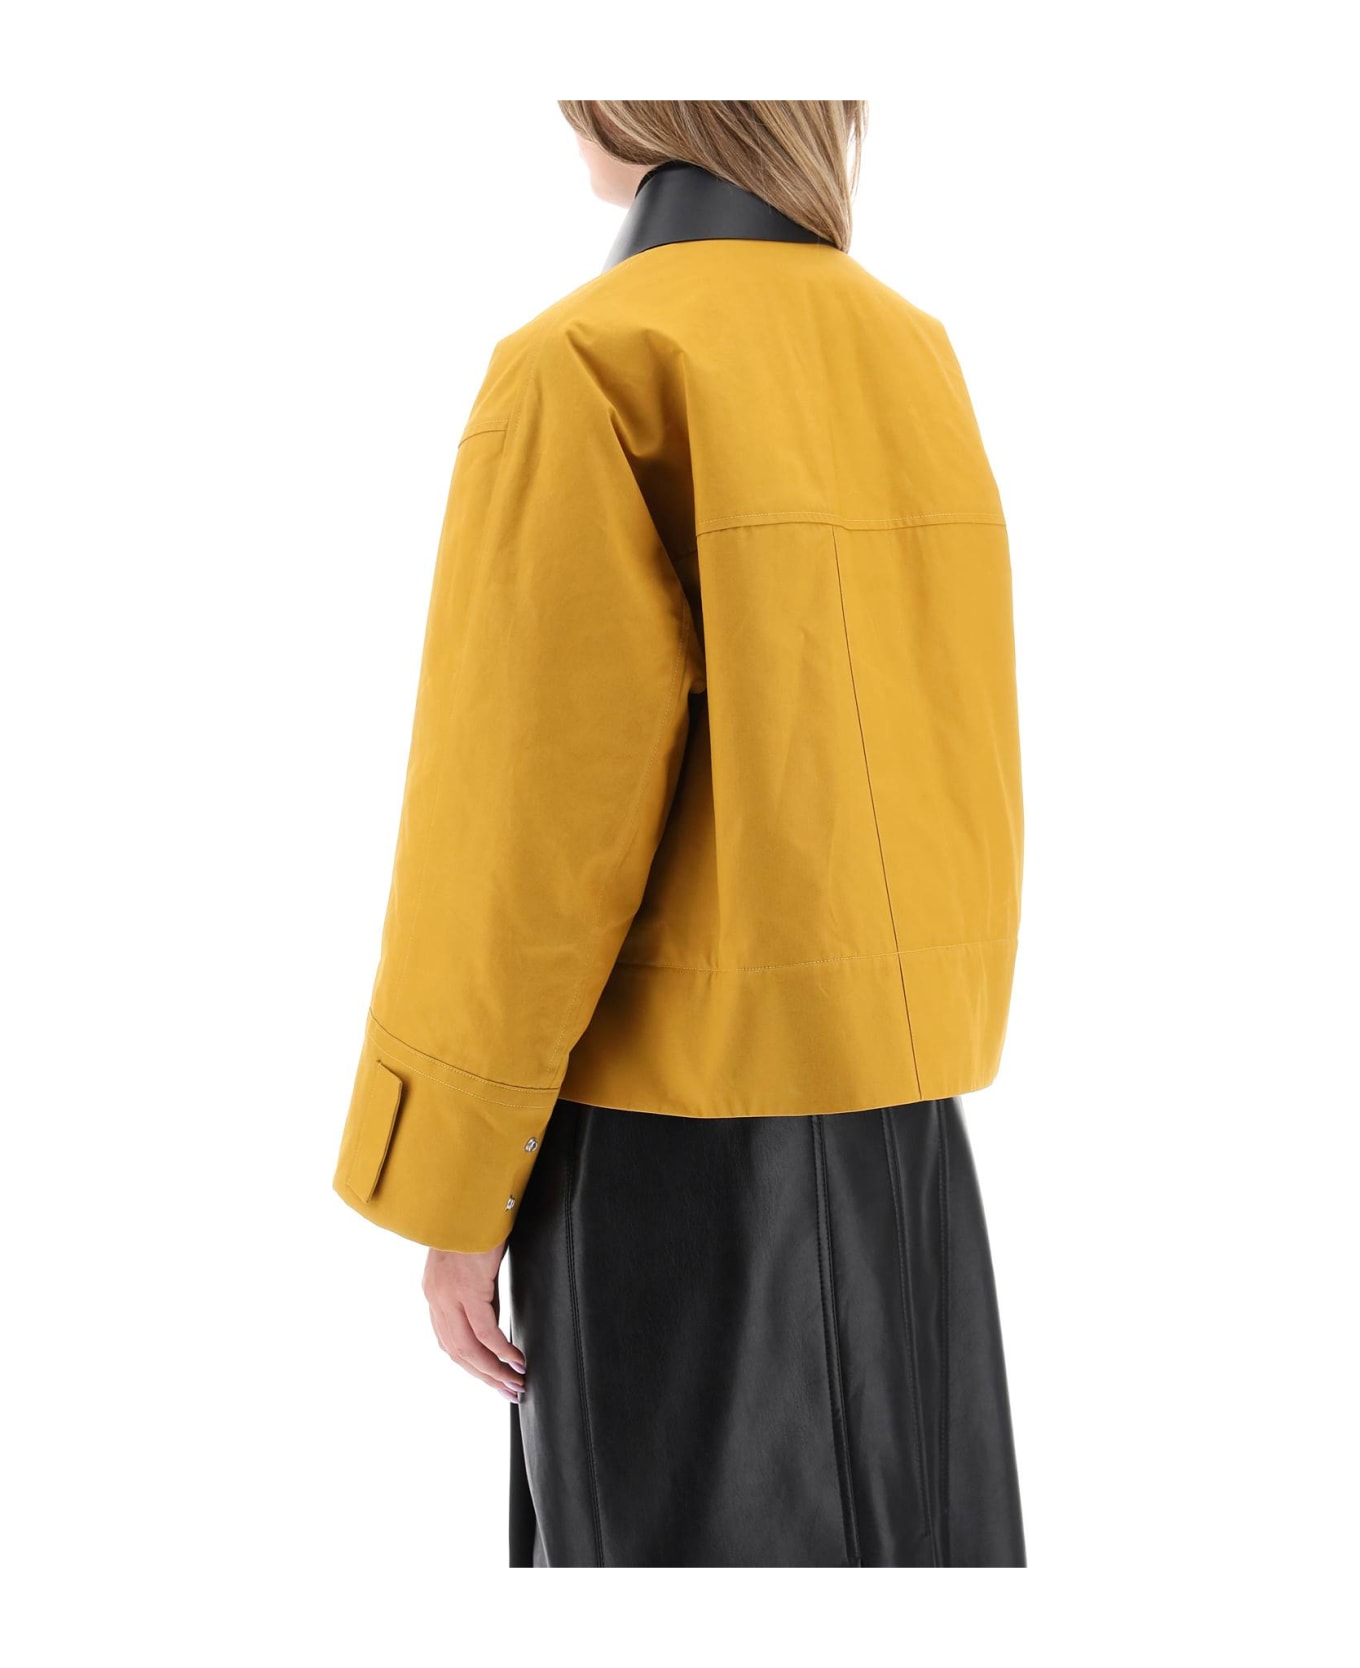 Jil Sander Jacket With Leather Collar - MUSTARD (Yellow) ジャケット